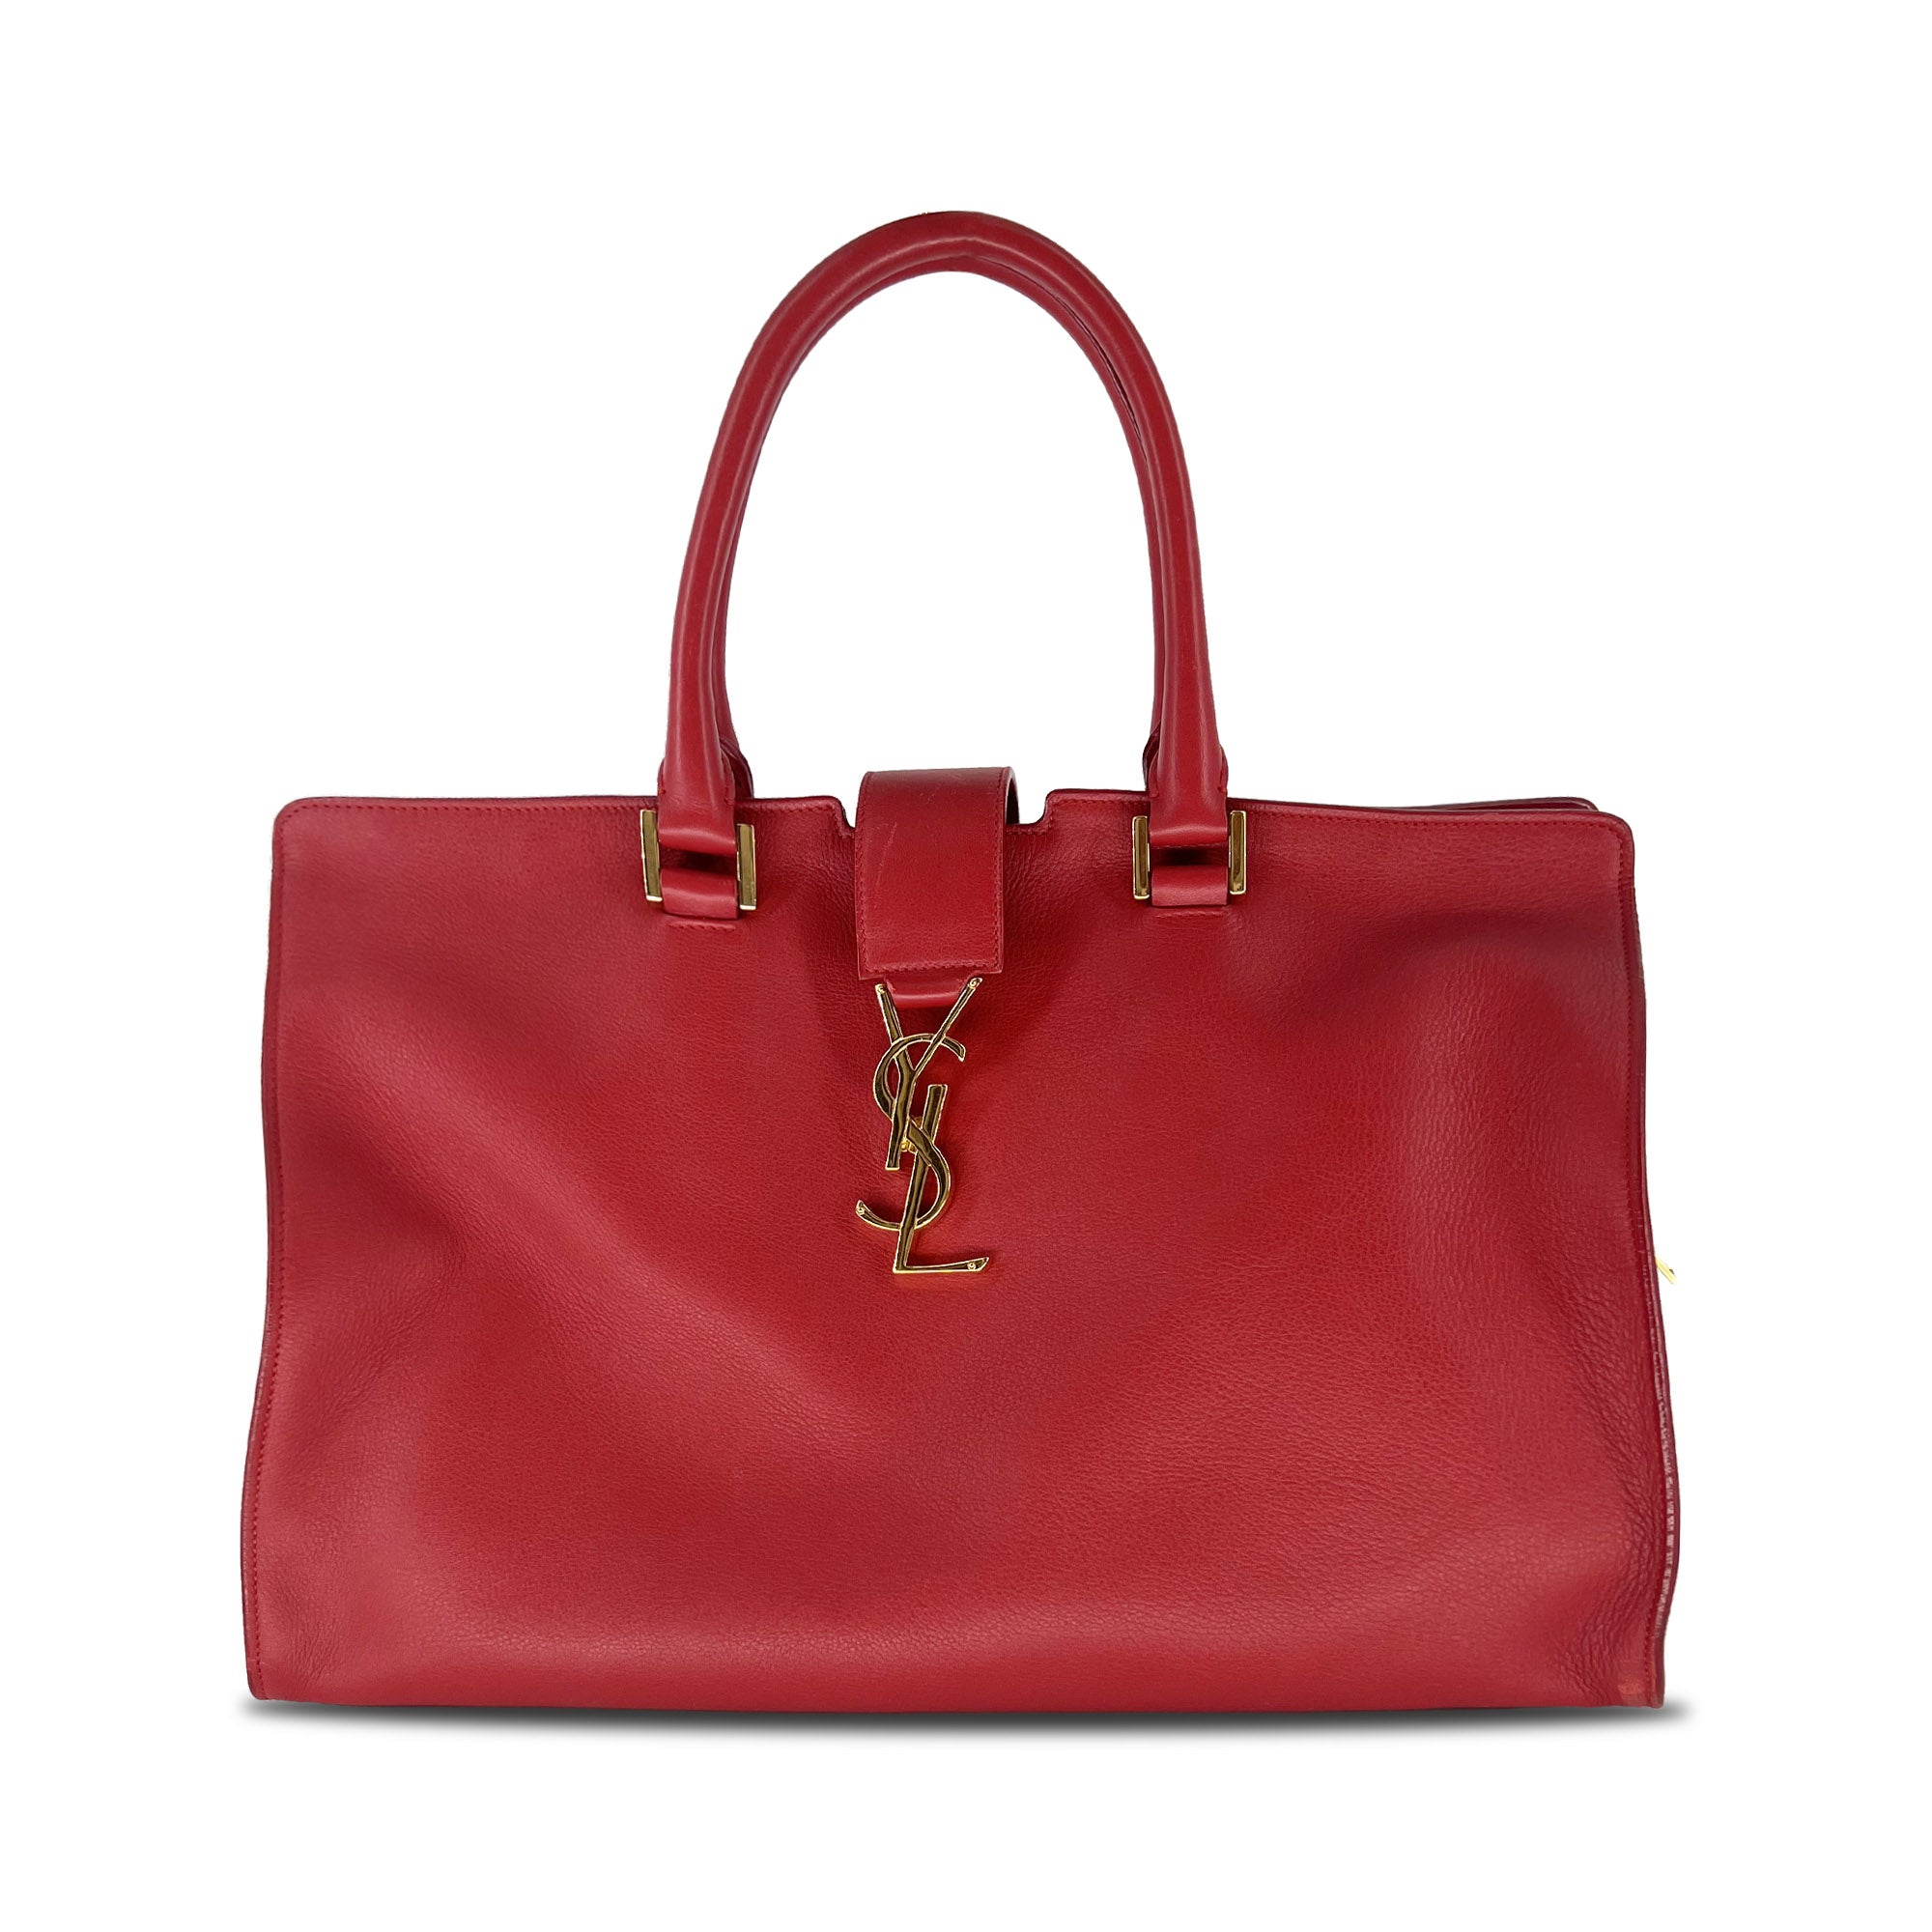 Yves Saint Laurent Red Chyc Handbag